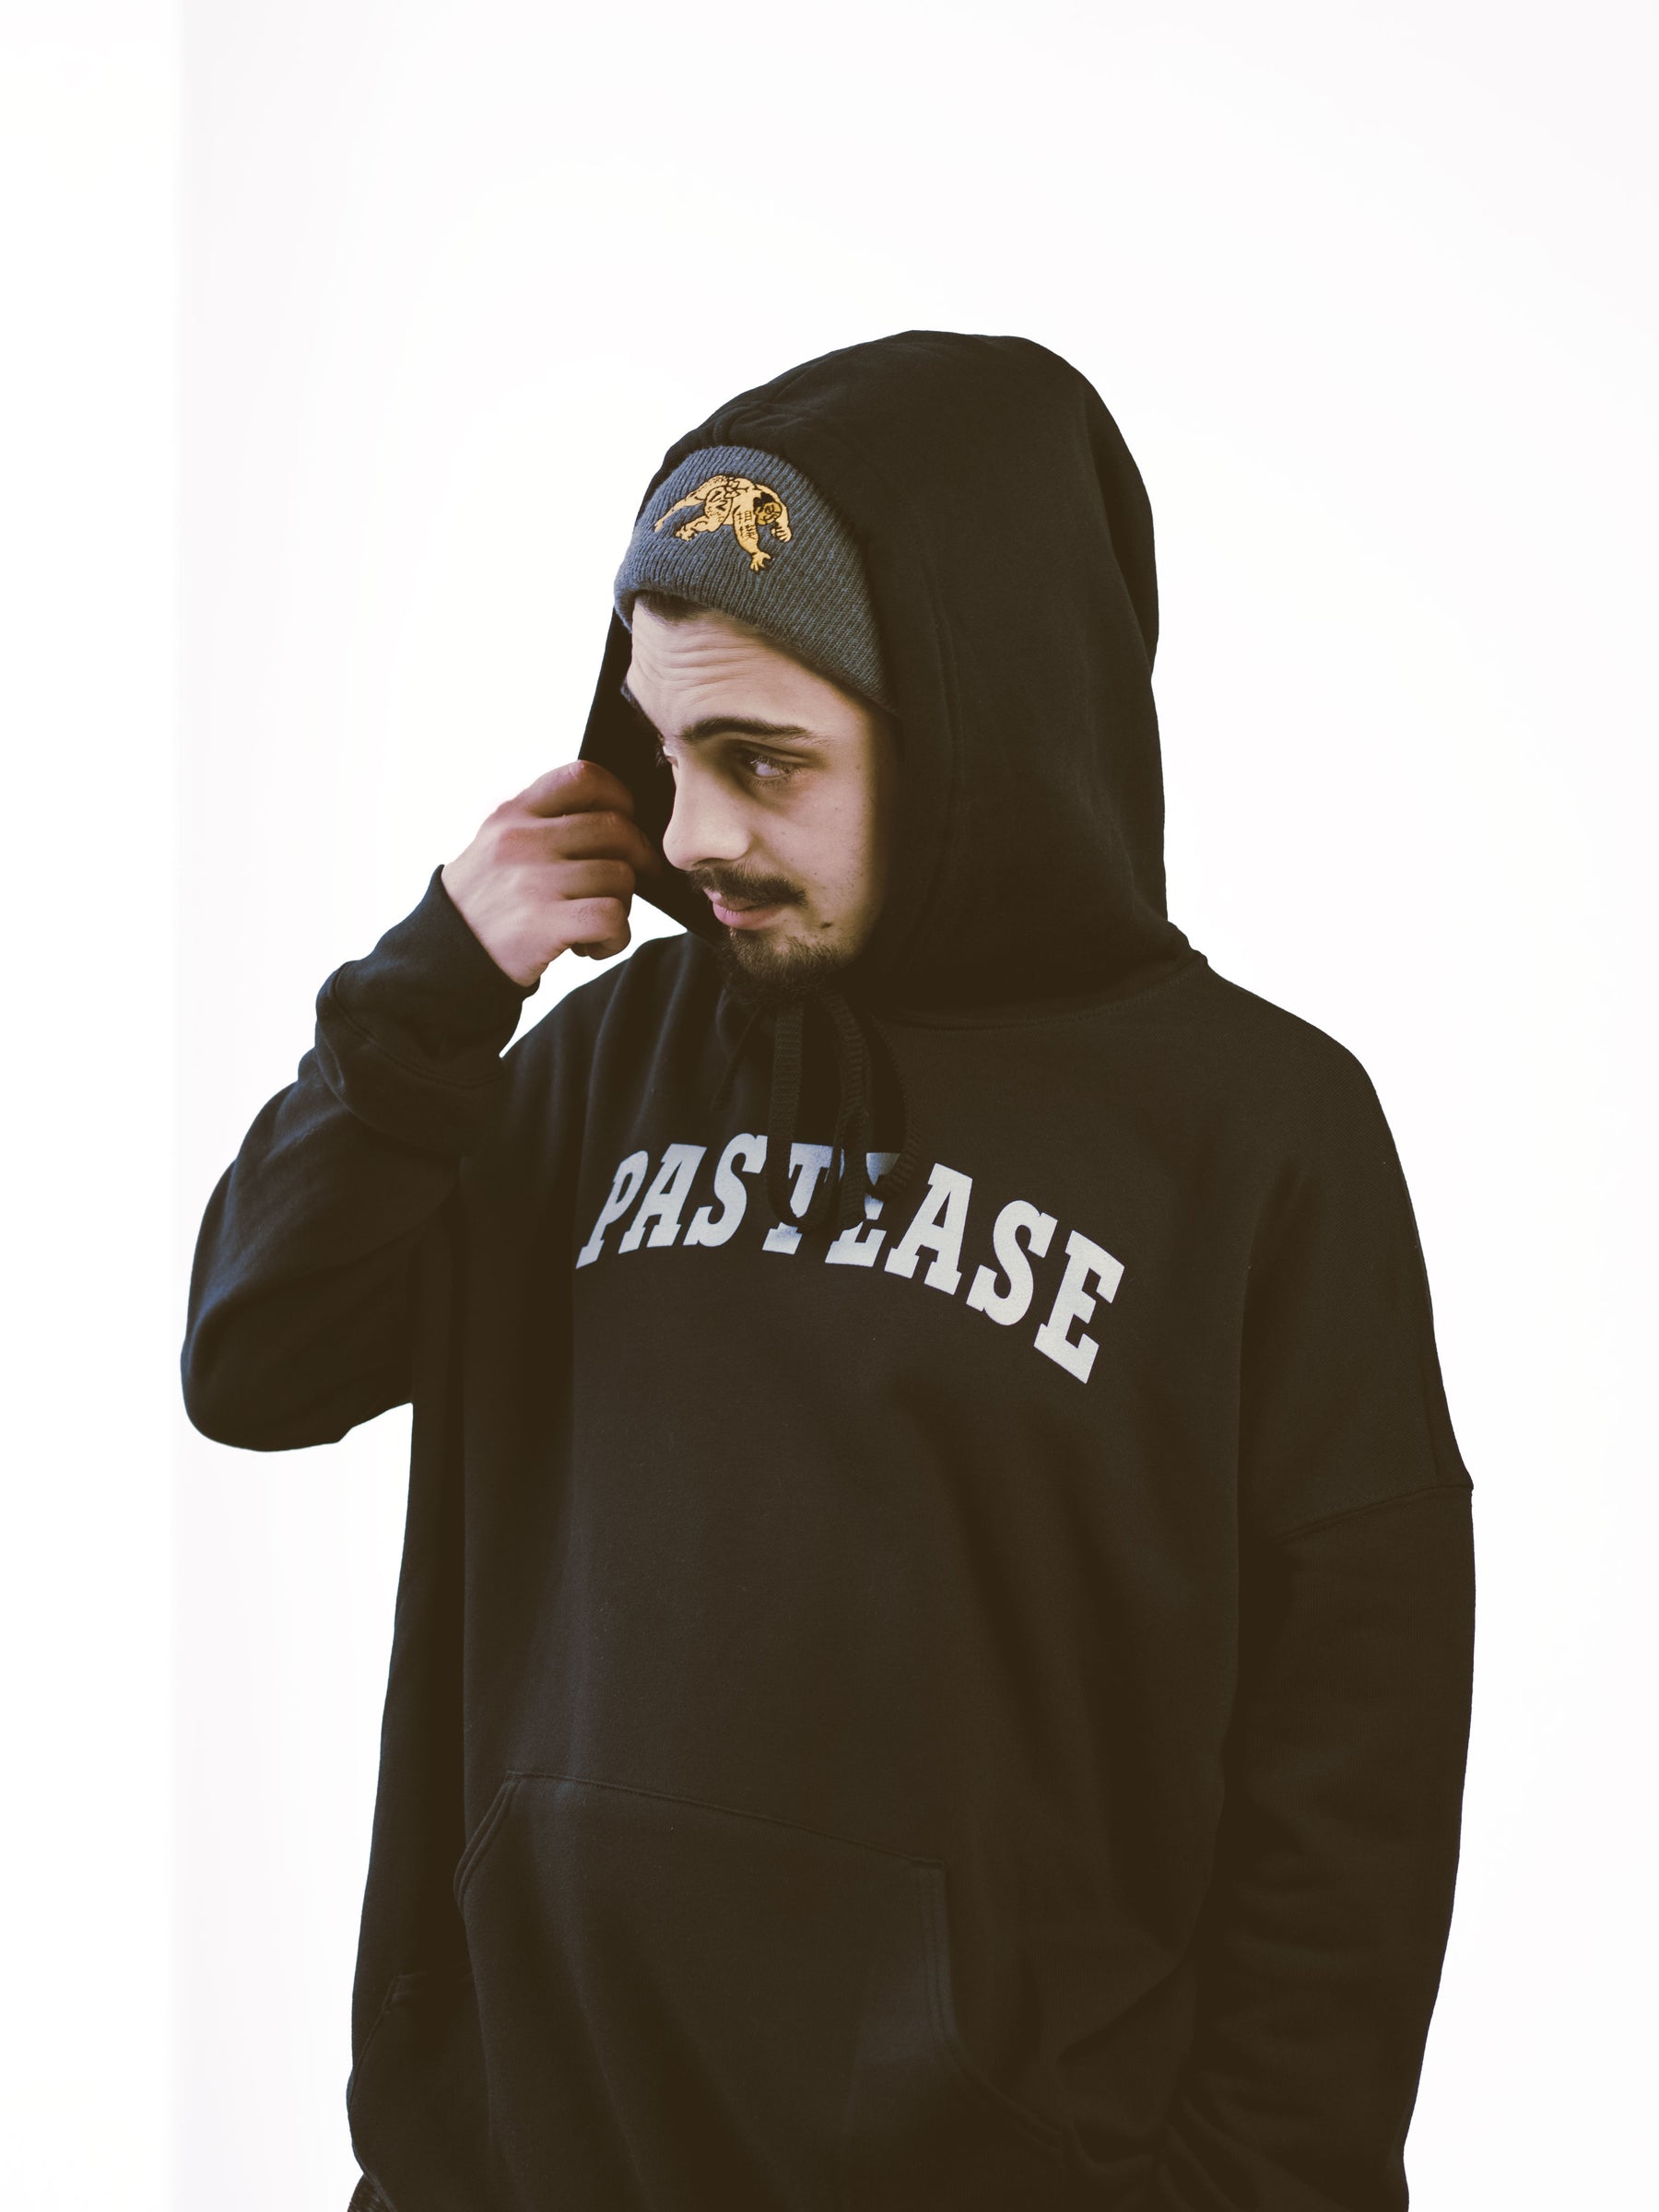 Hoodie: Unisex Sponge Fleece Pullover Black w White 'Pastease' University Logo